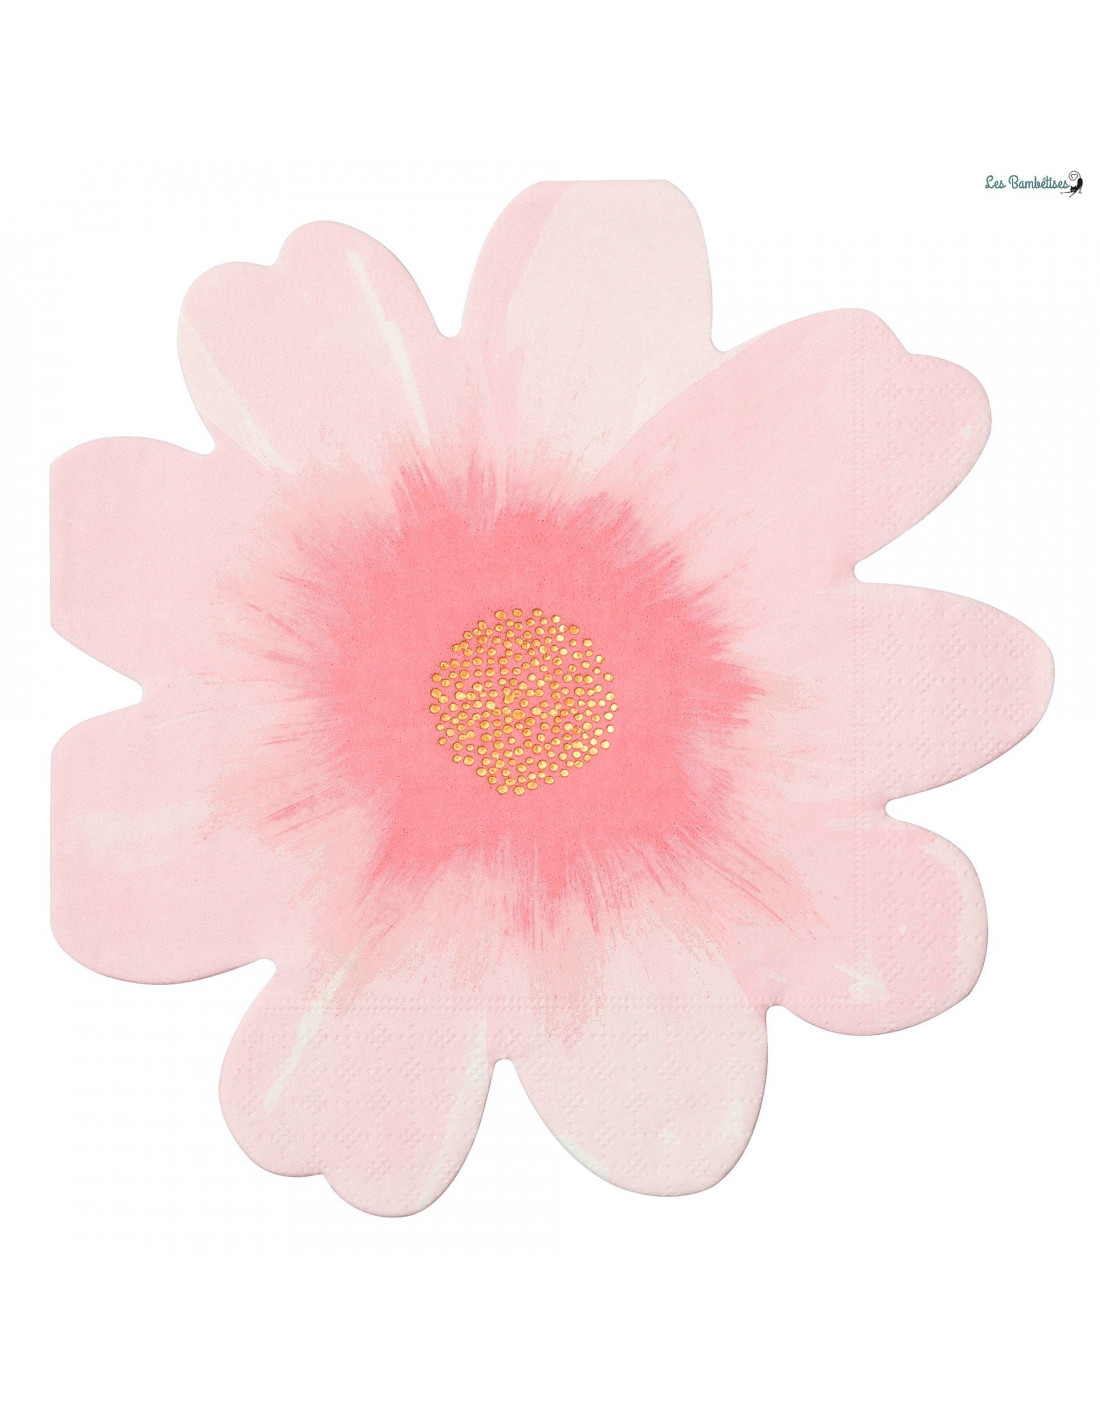 16 Grandes Serviettes Fleurs Happy Birthday Rose Gold - Les Bambetises